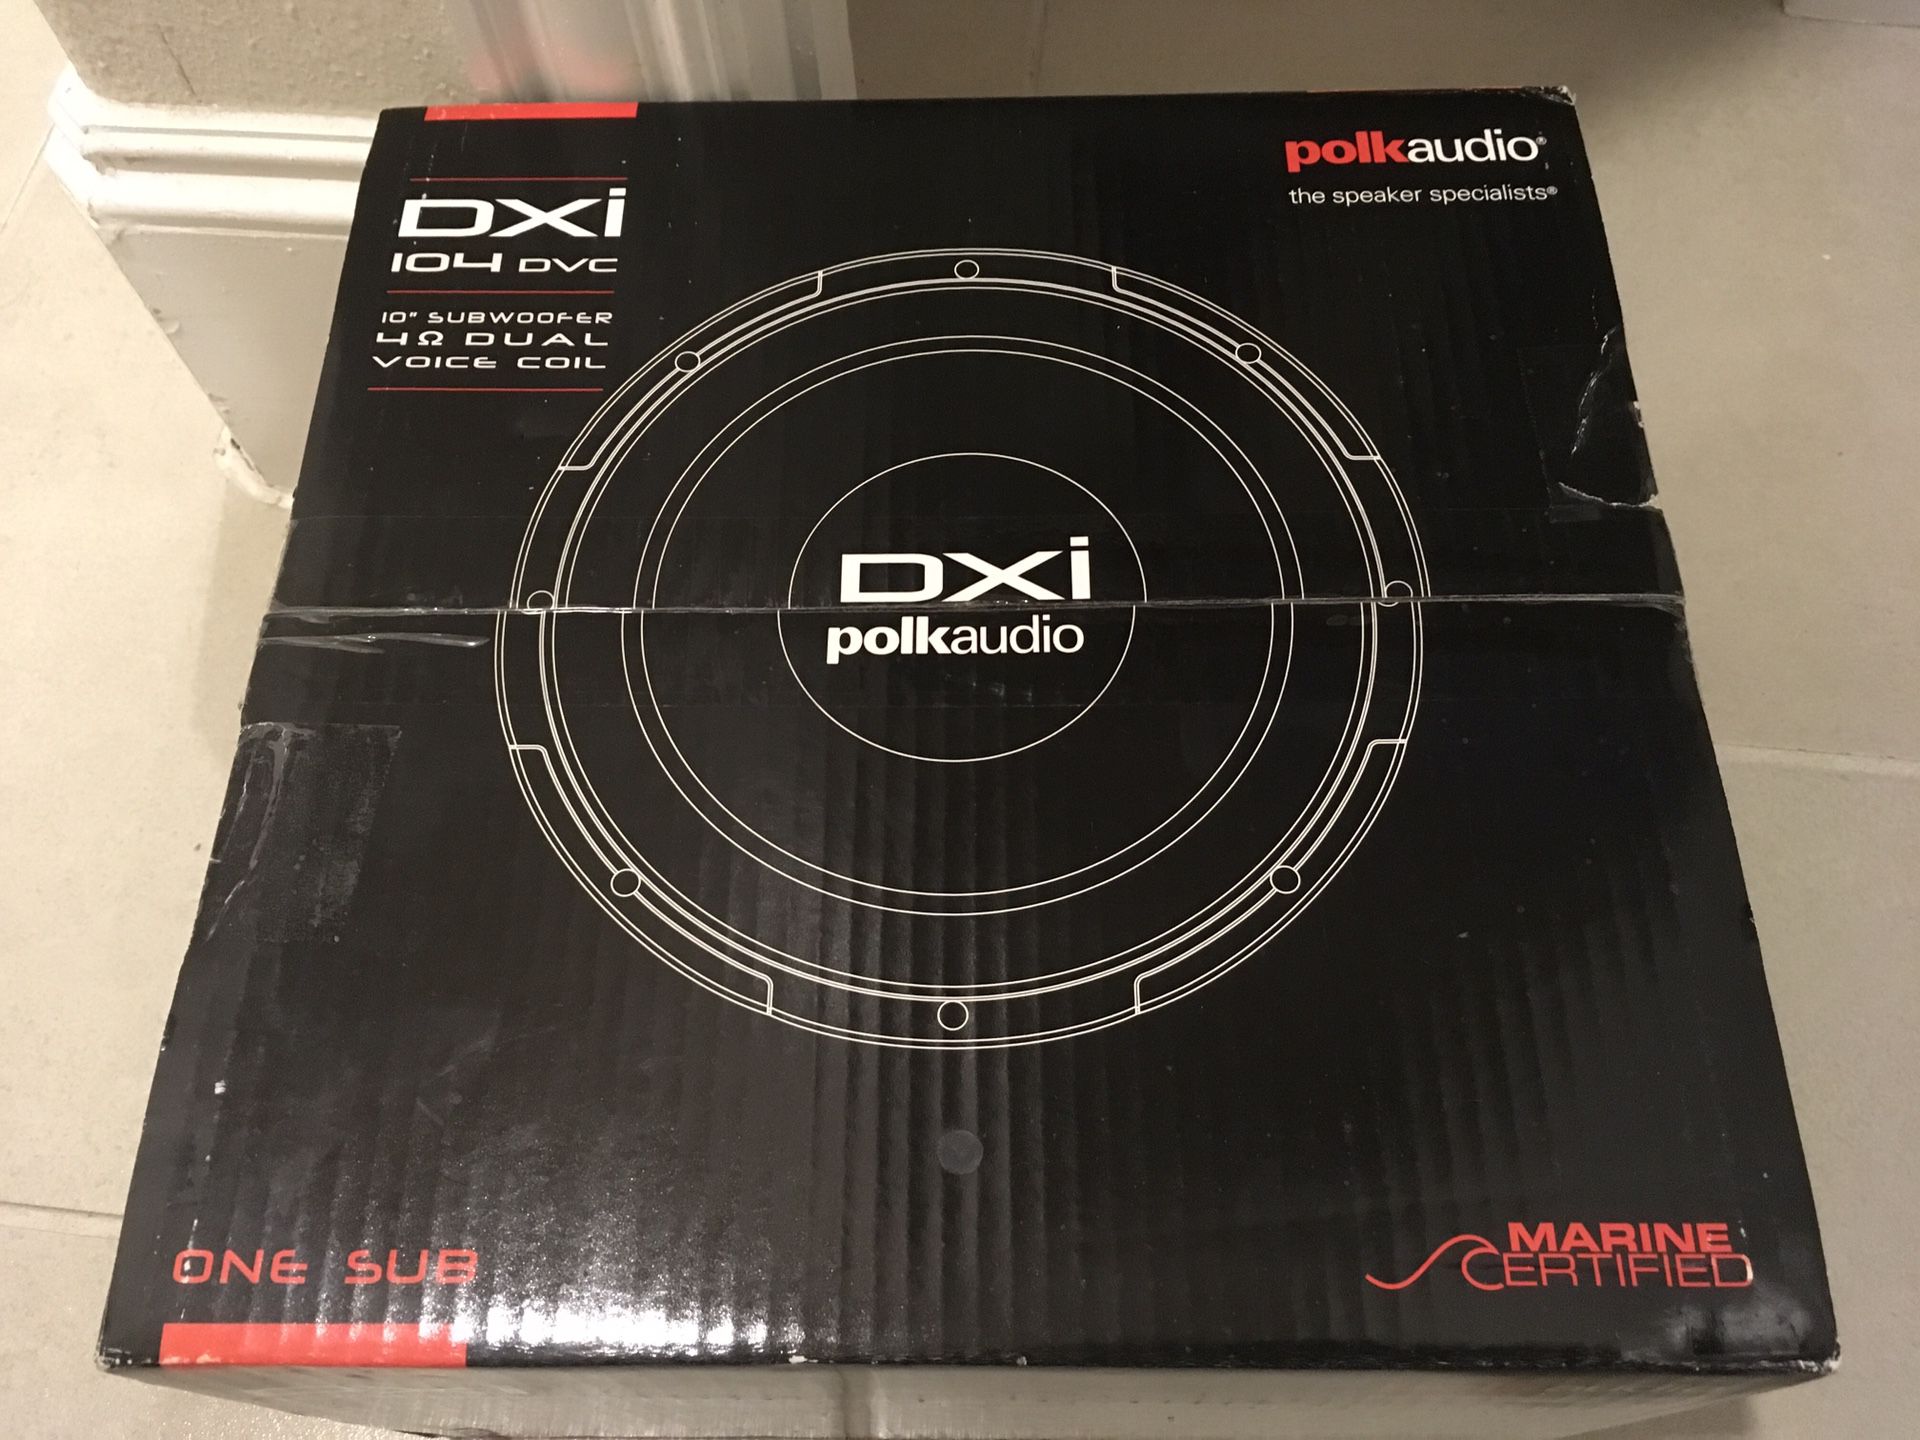 Polk Audio 10” Subwoofer DXI 104 DVC, 4 Ohm